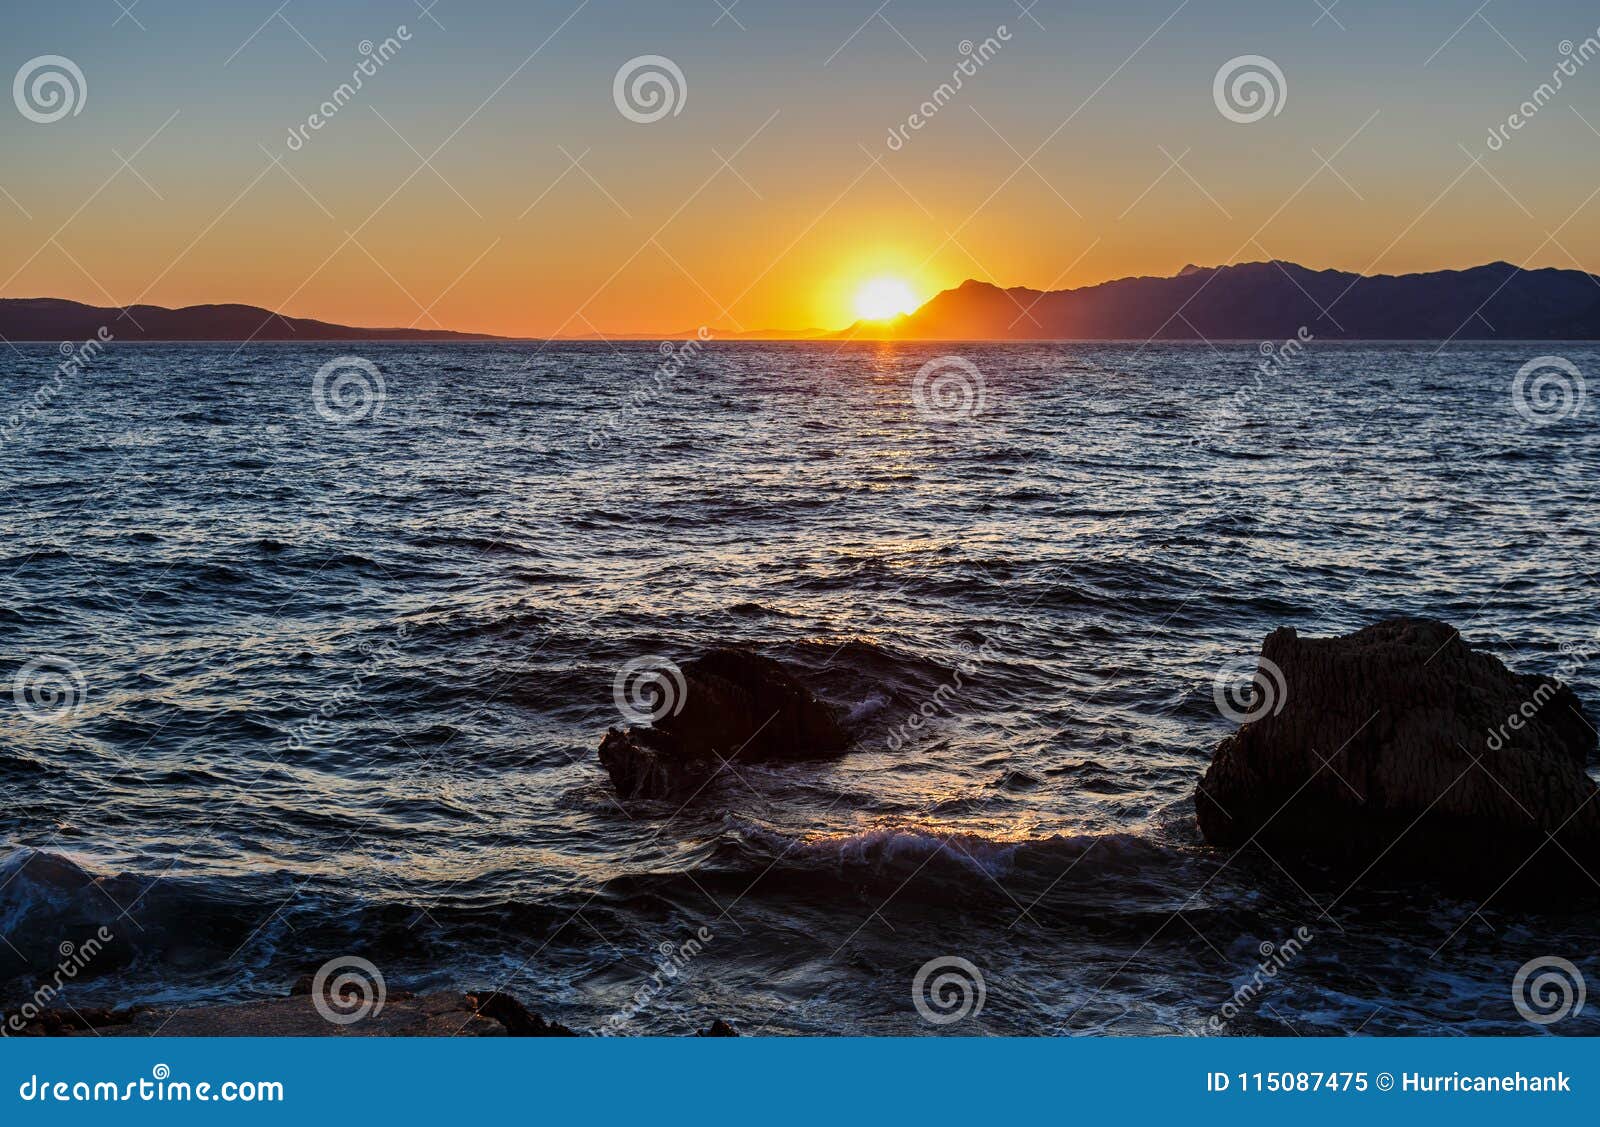 Bright Sunset on Seaside in Croatian Resort Stock Image - Image of  colorful, dusk: 115087475